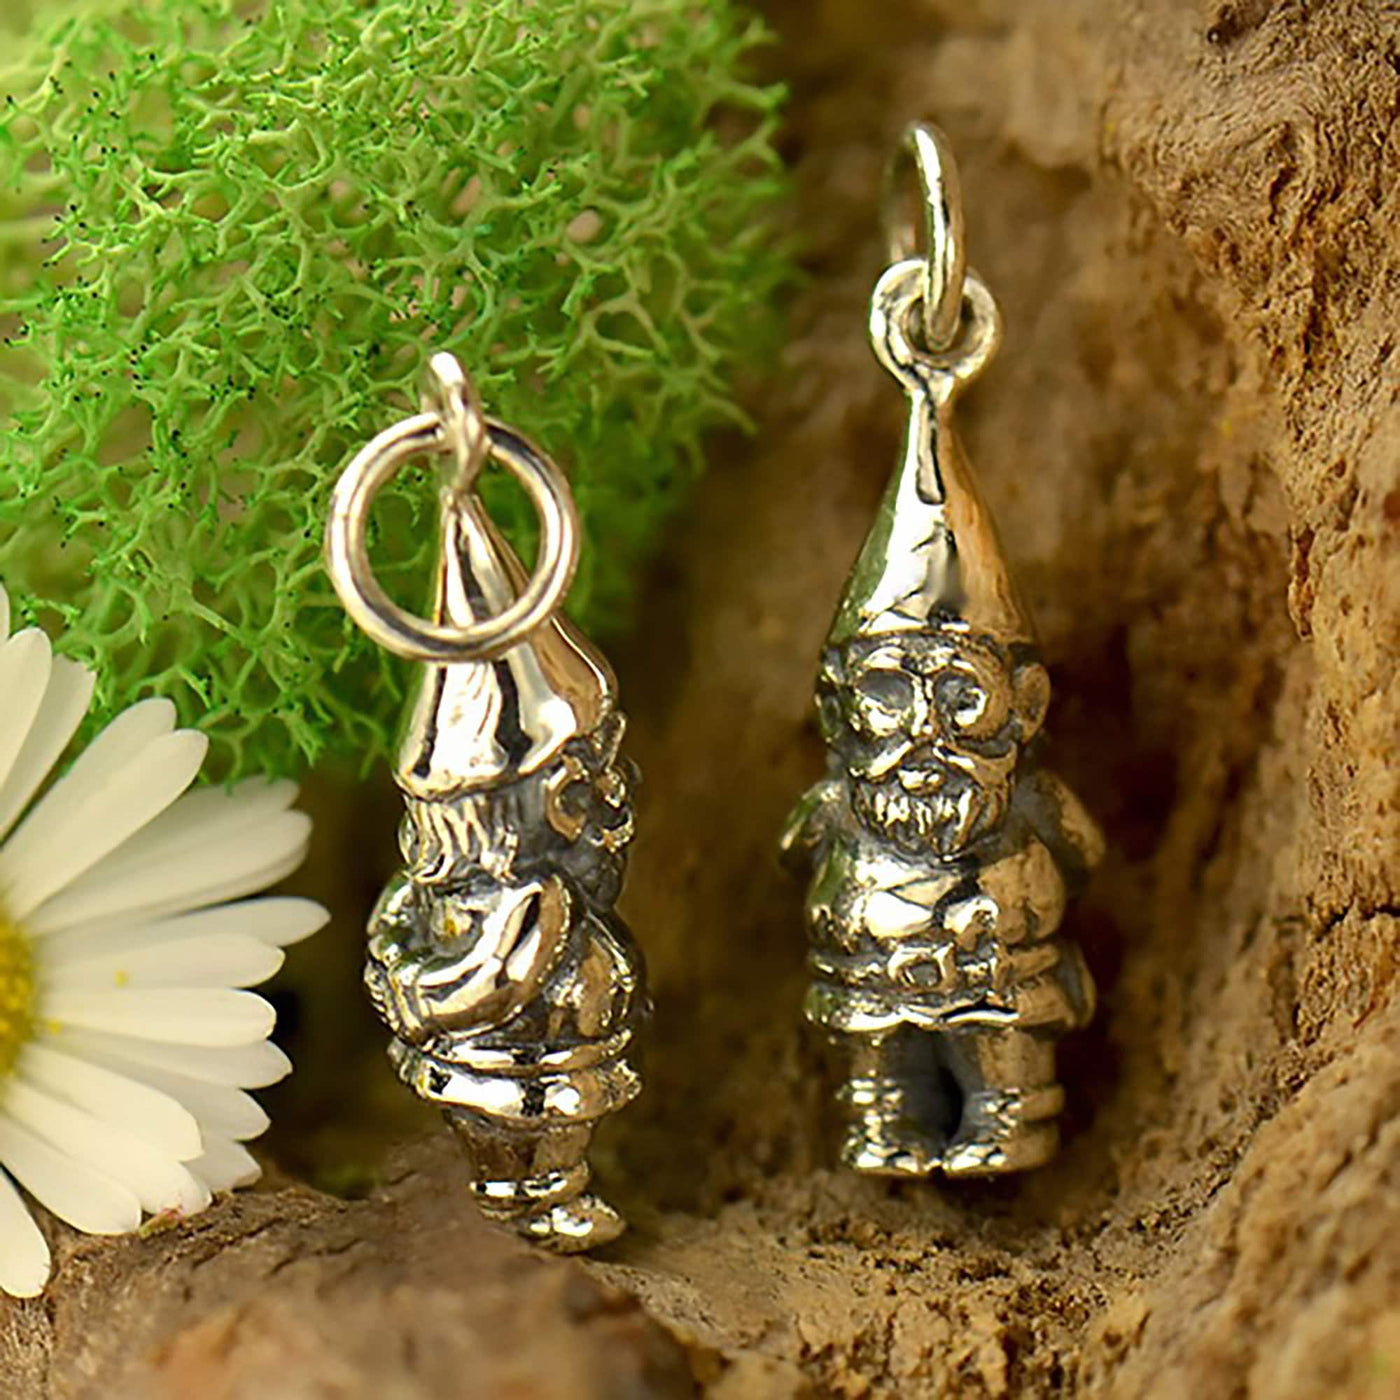 Garden Gnome Charm • Lawn Gnome Charm • Garden Dwarf Charm • Whimsical Fairy Tale Jewelry